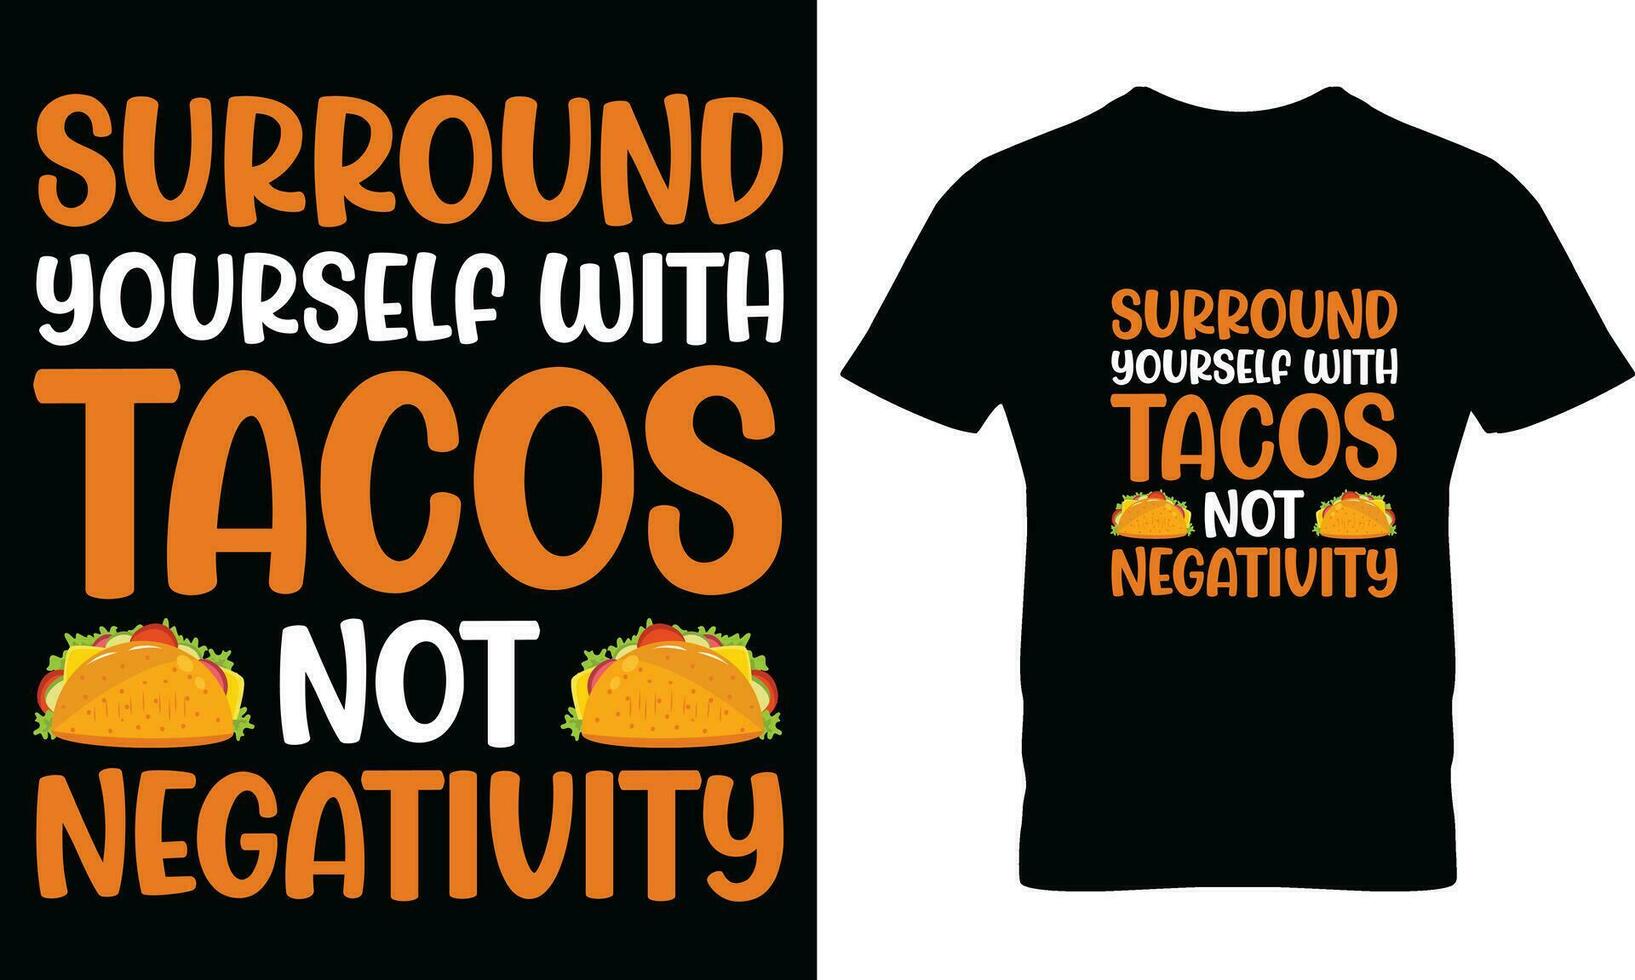 taco's t-shirt ontwerp vector grafisch.